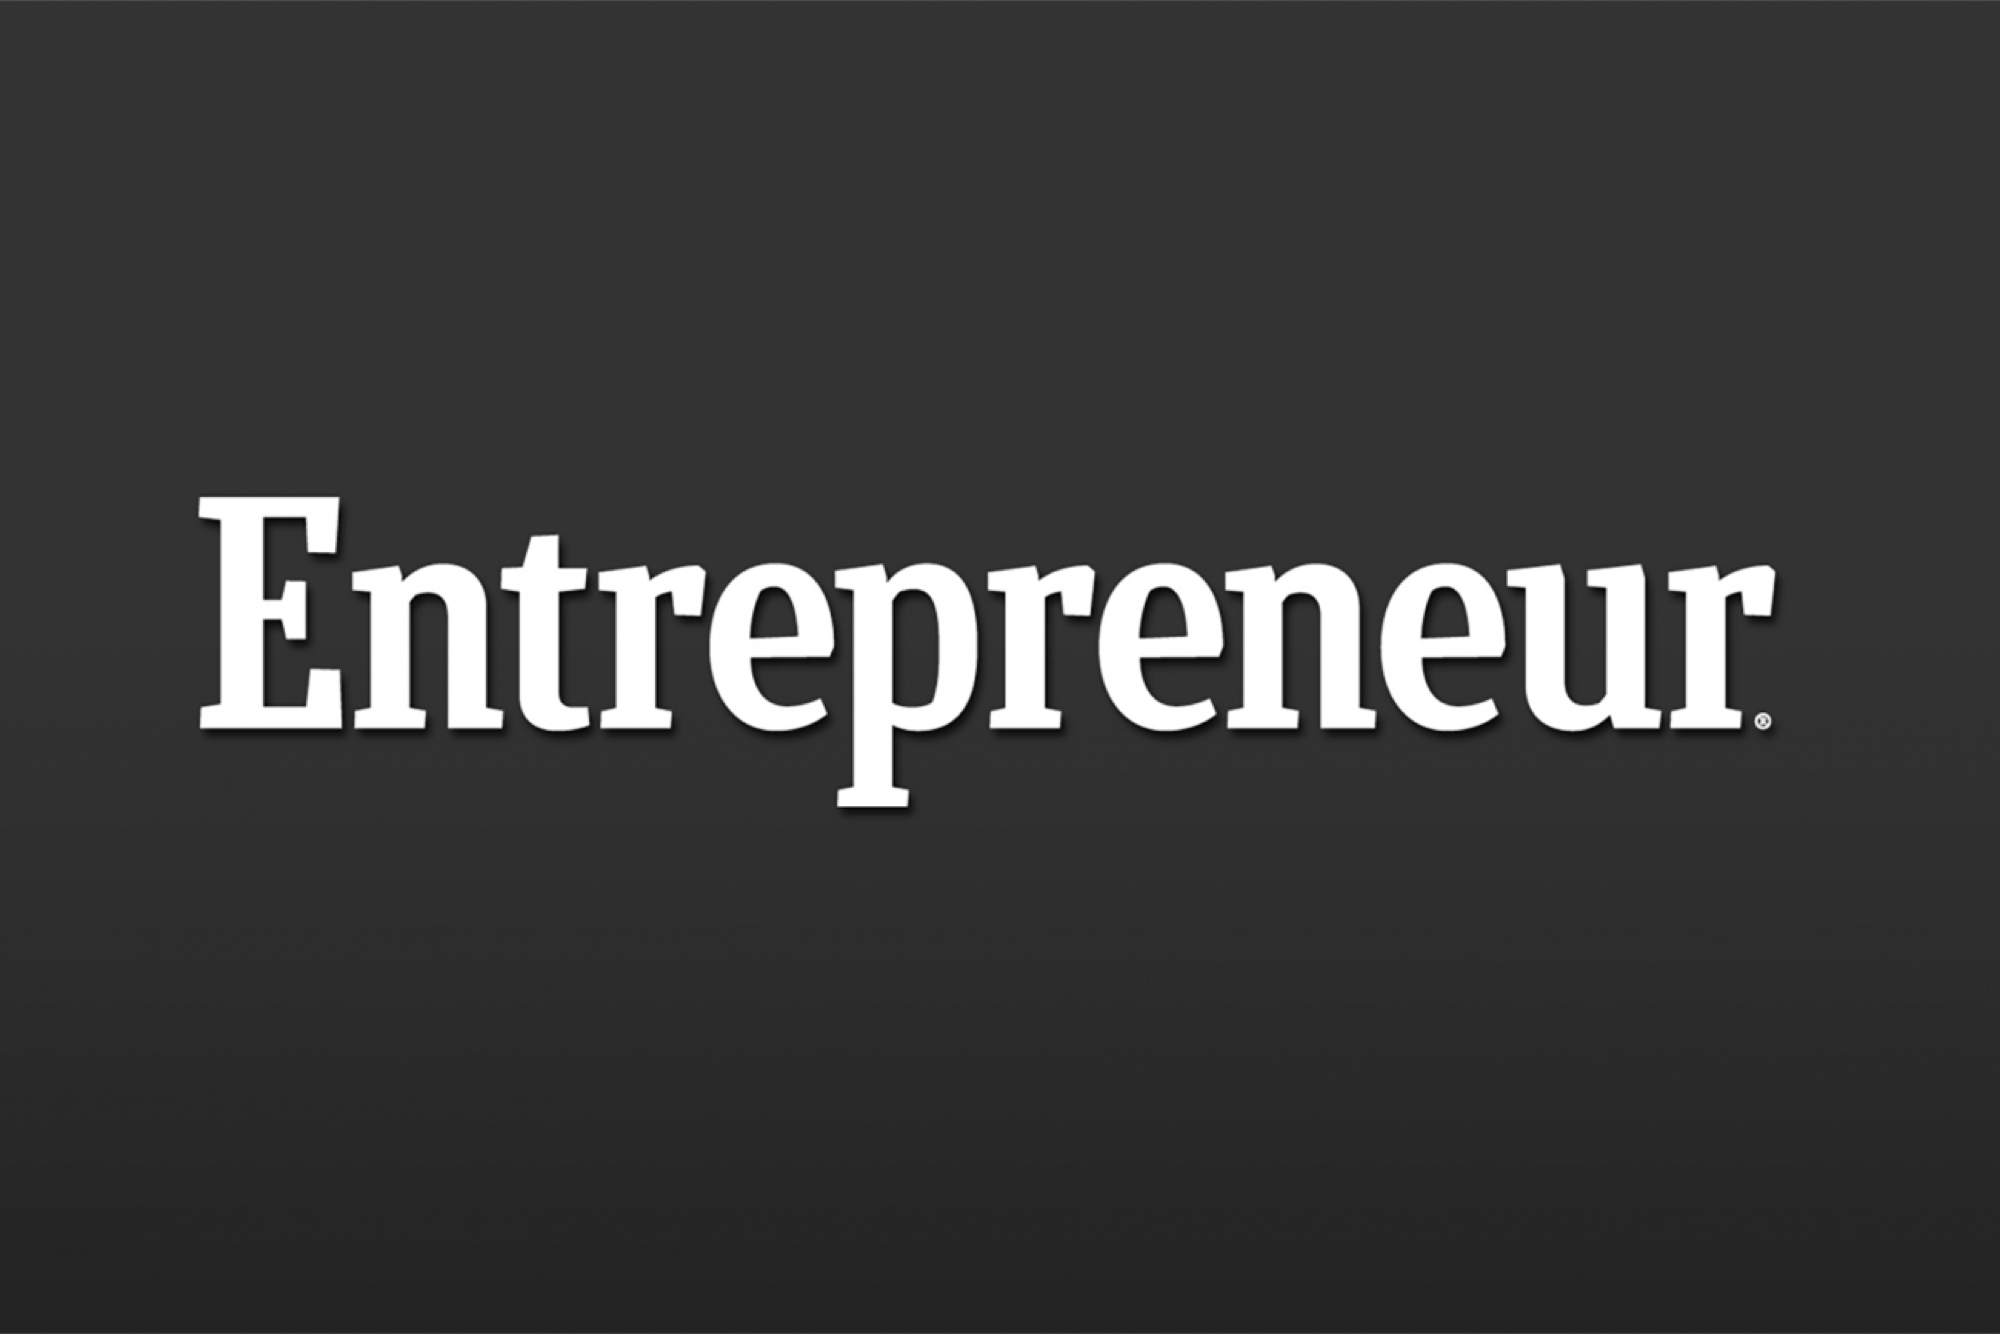 Entrepreneur Magazine Logo - Entrepreneur - Start, run and grow your business.